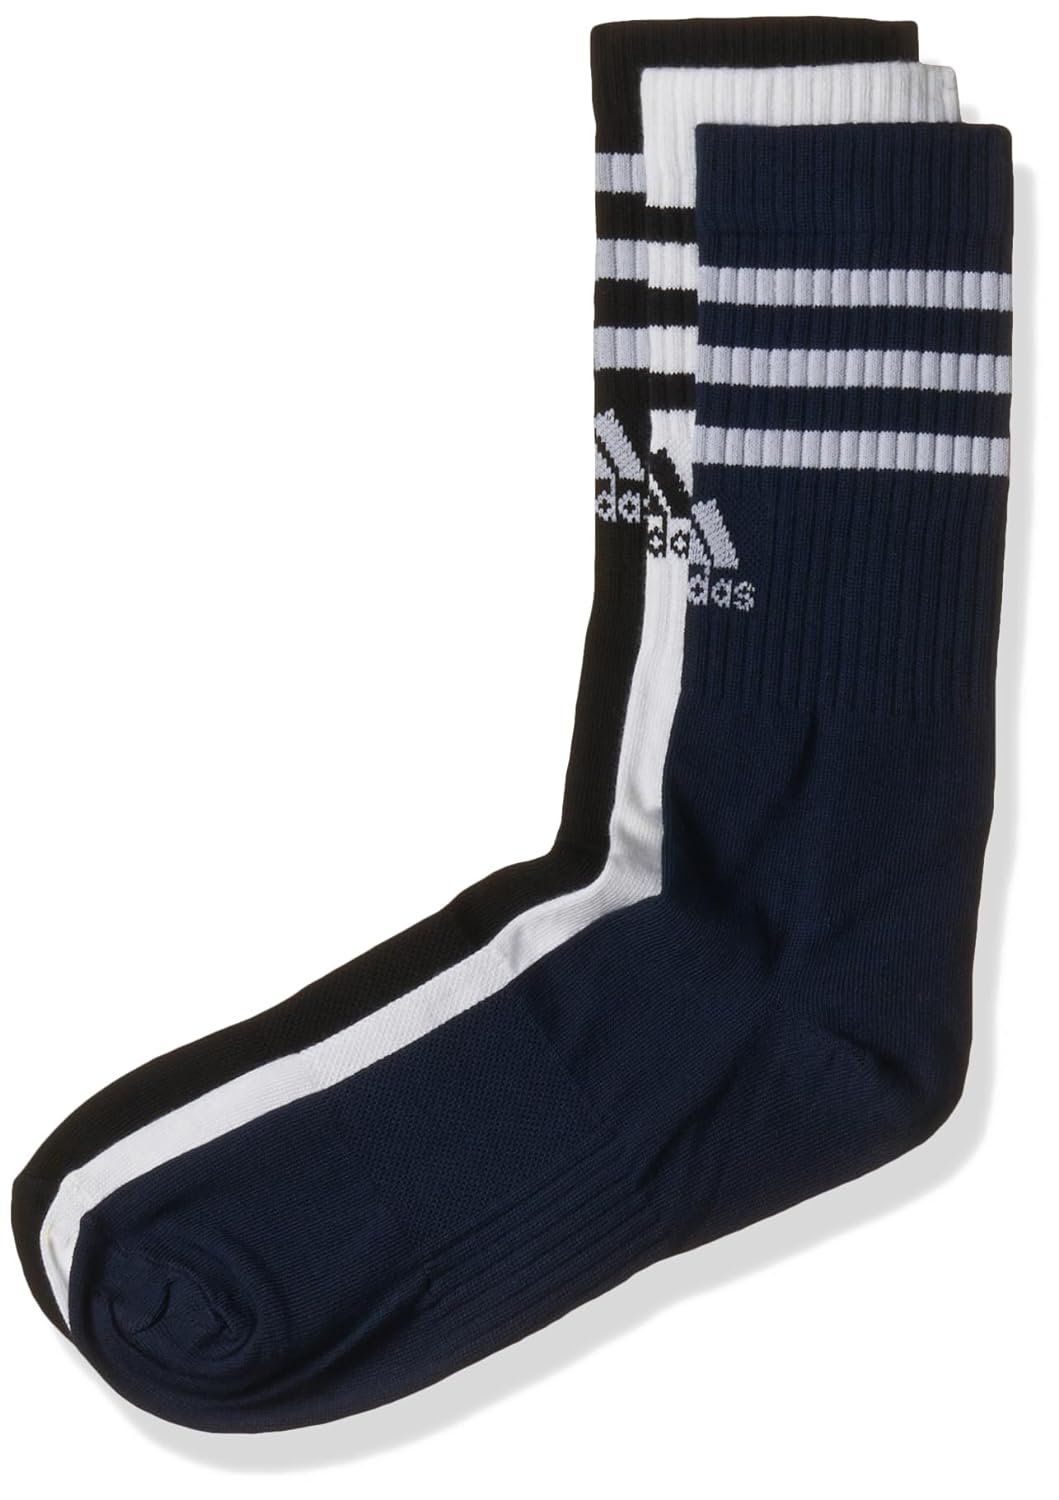 Adidas Men Adult Training Crew Socks Cotton for All Season